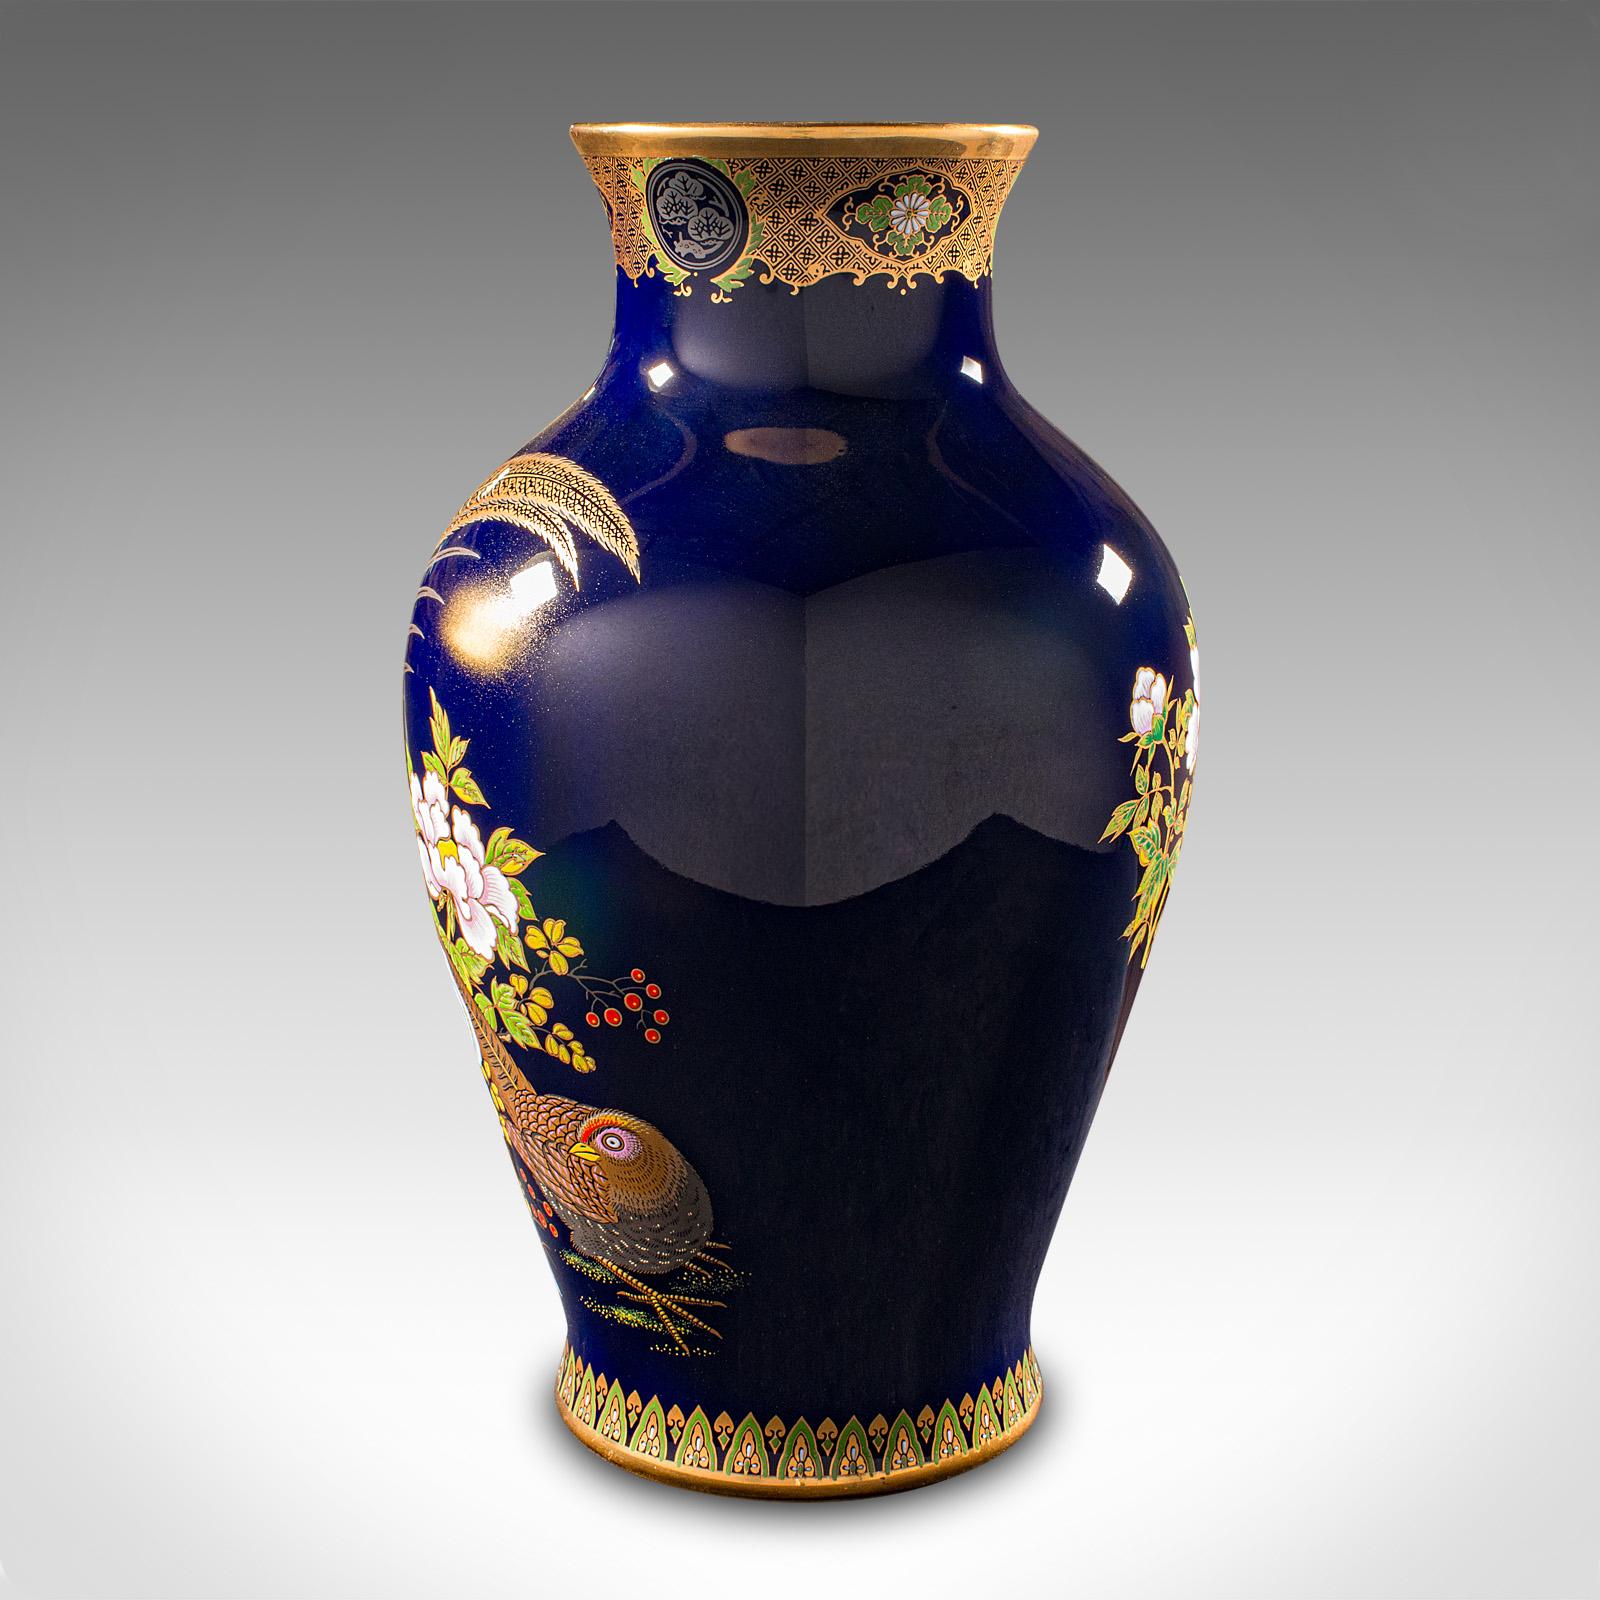 20th Century Vintage Golden Pheasant Vase, Chinese, Lacquer Ceramic Baluster Urn, Flower Pot  For Sale